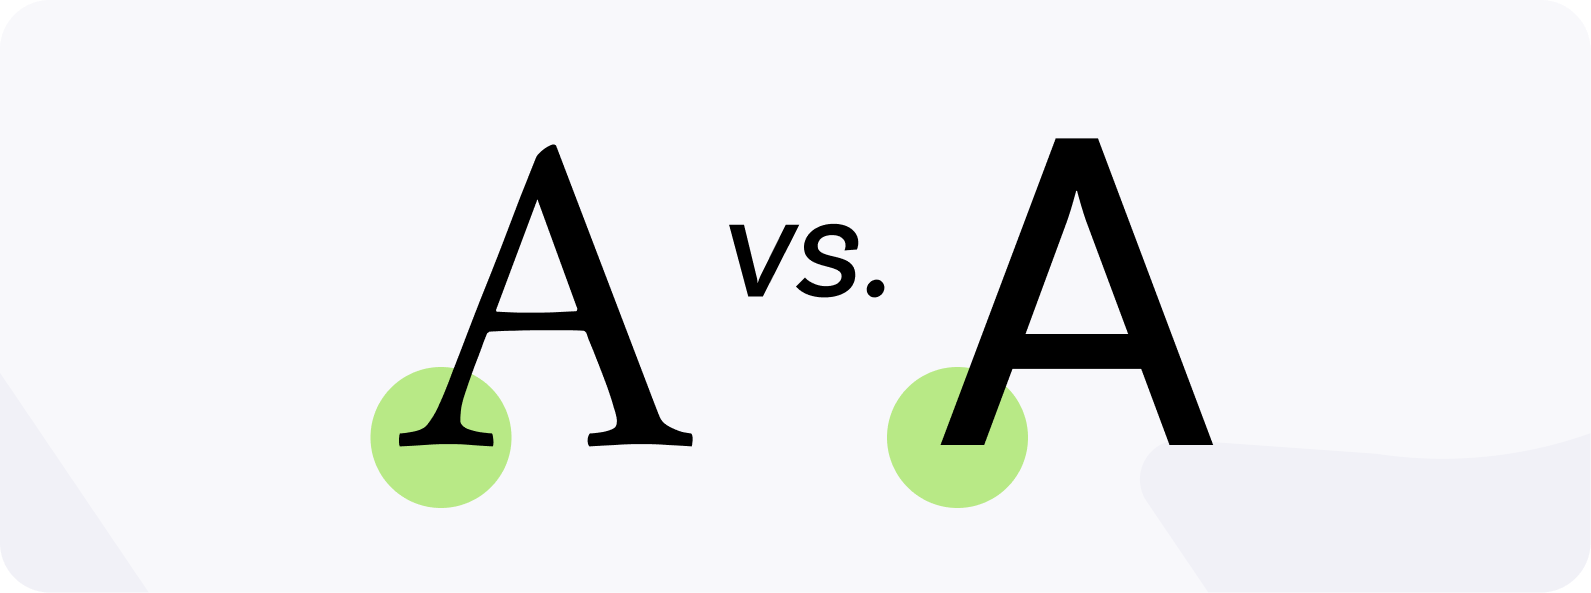 Serif vs sans serif example